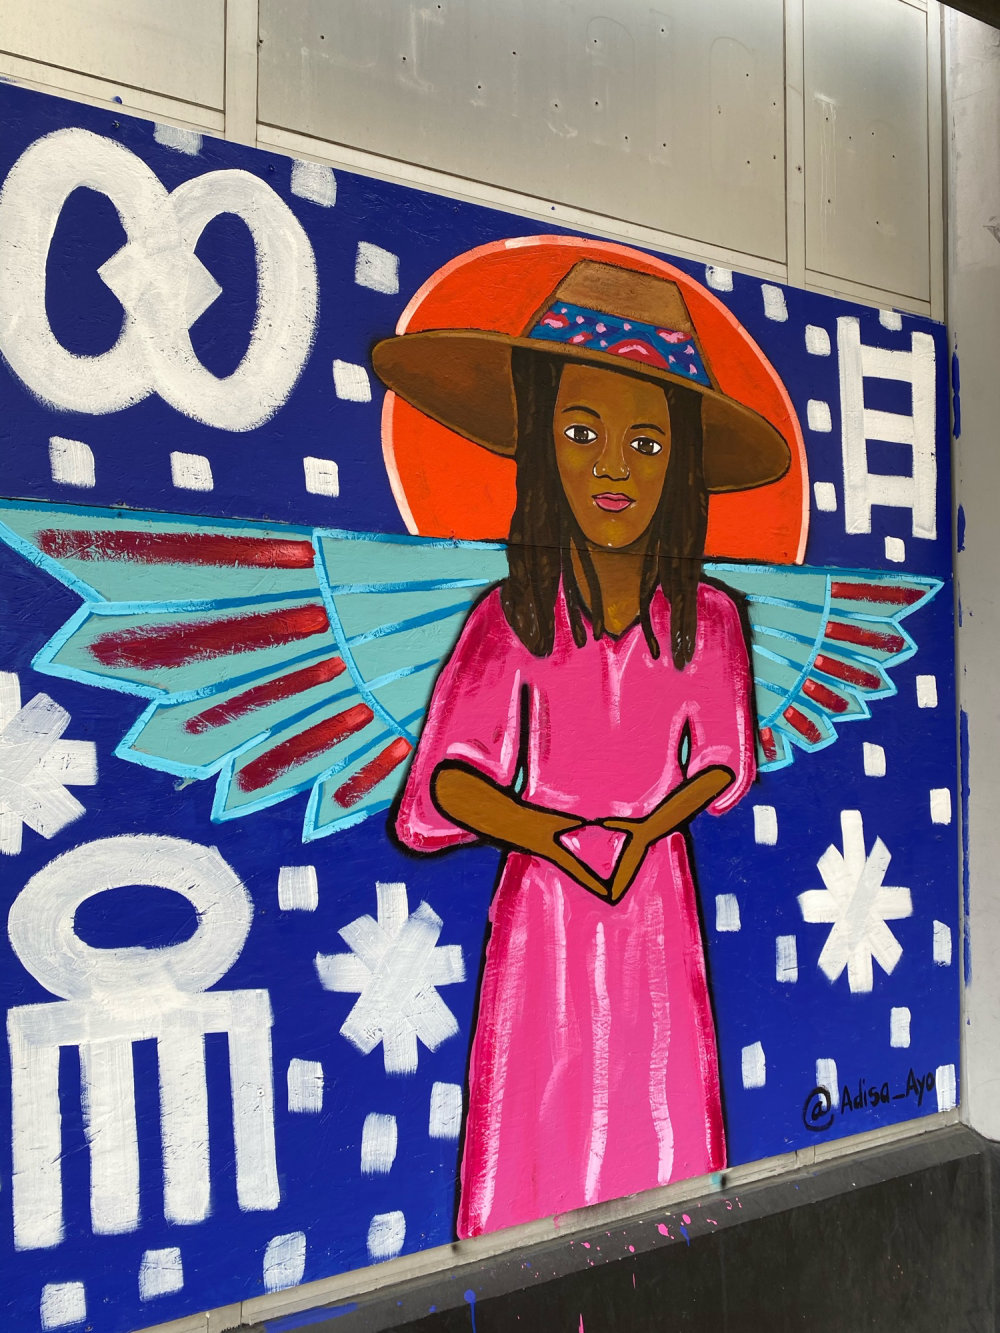 mural in Oakland by artist Adisa Davis.